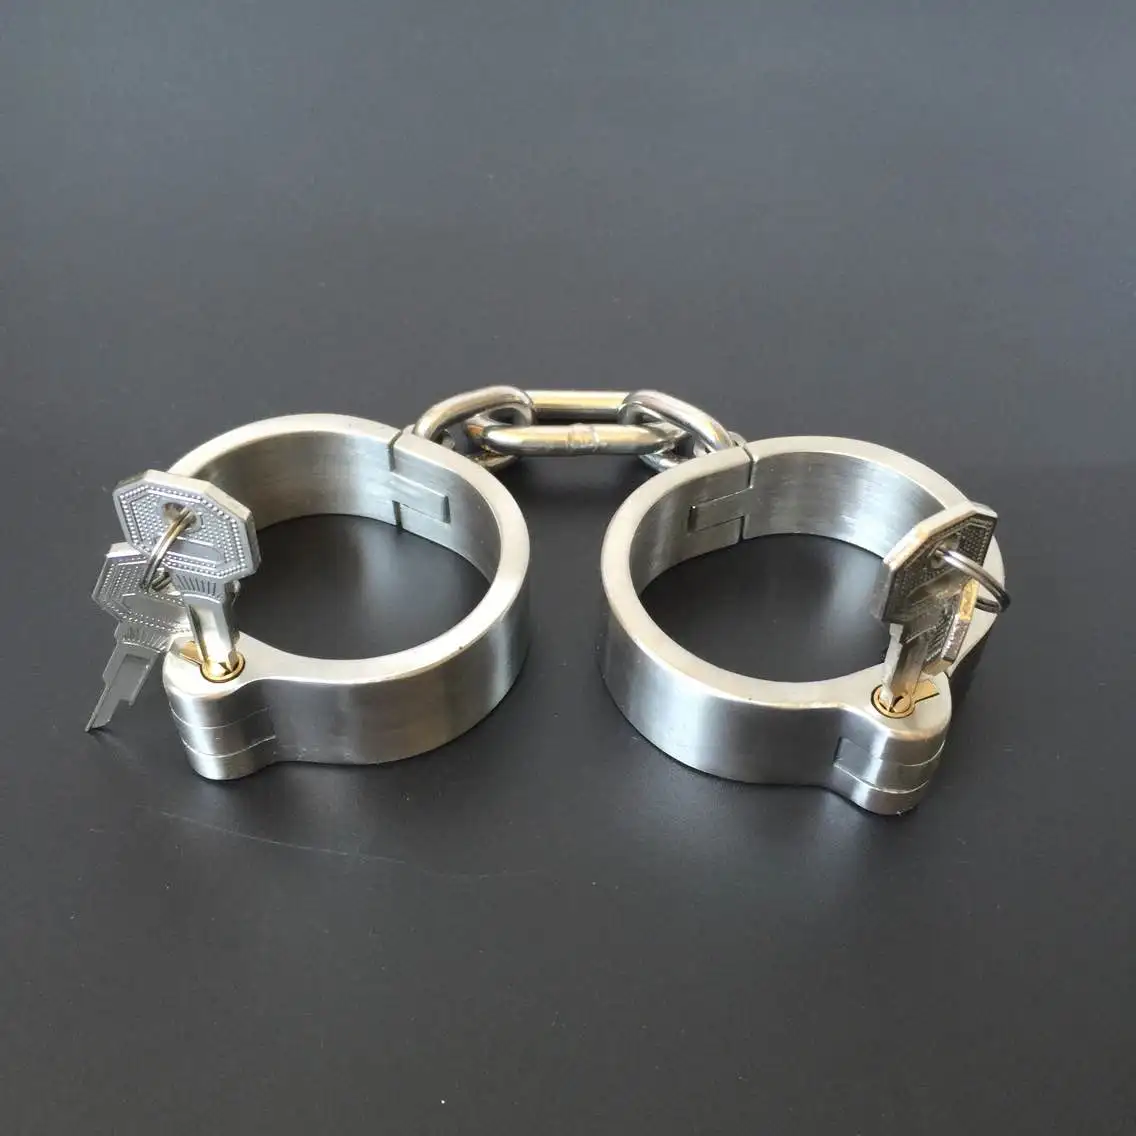 Stainless Steel Handcuffs For Sex Oval Type Bondage Lock Bdsm Fetish Wear Hand Cuffs Bondage